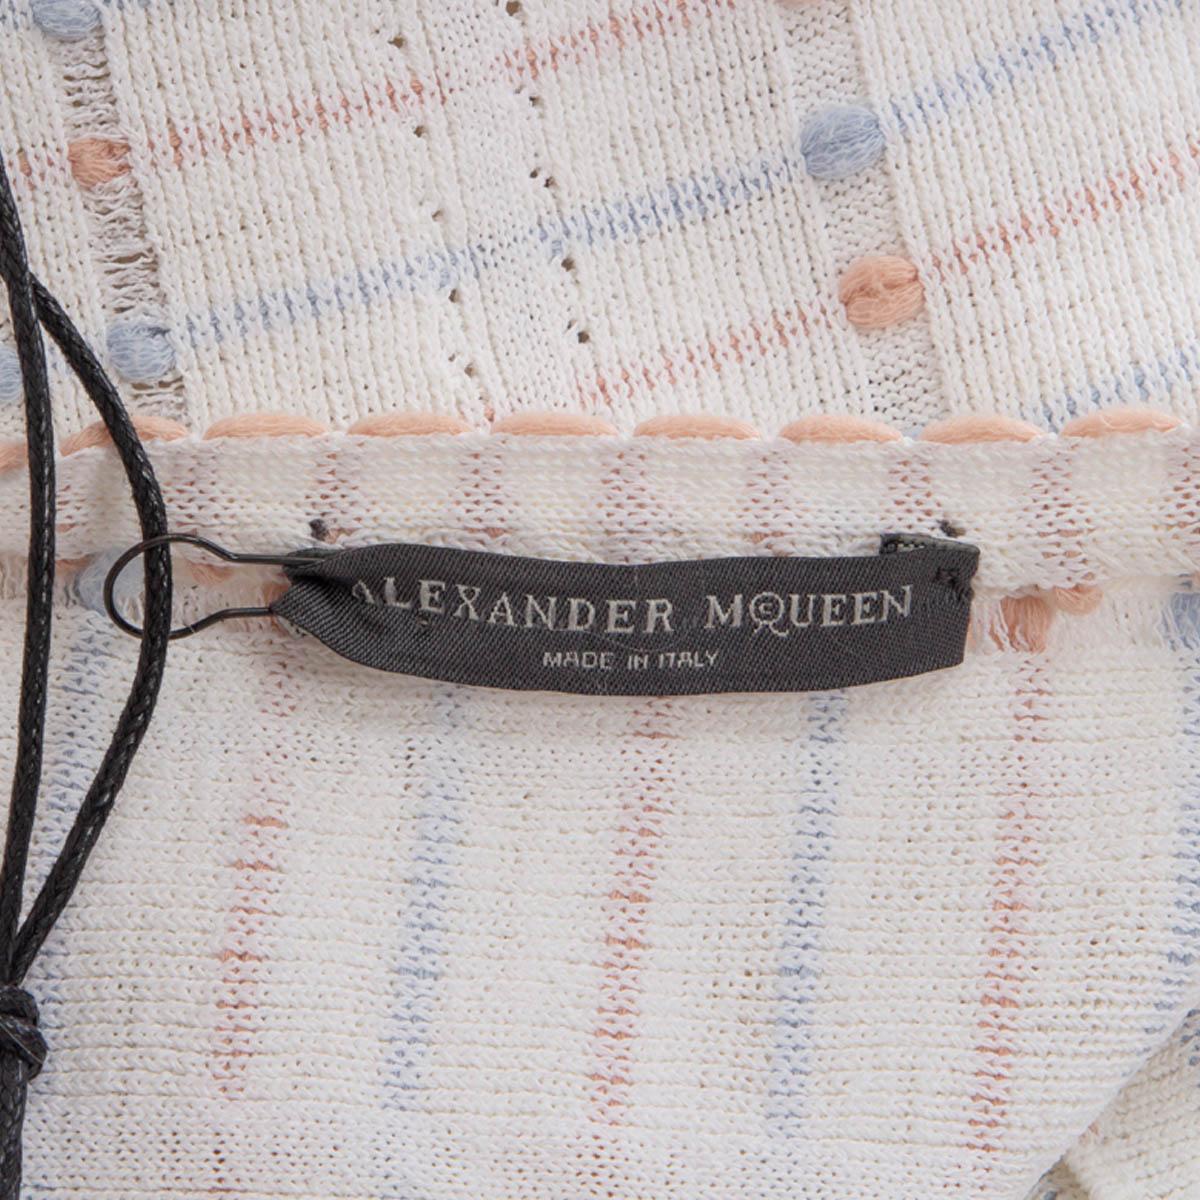 ALEXANDER MCQUEEN white viscose TWEED KNIT PEPLUM Cardigan Sweater S In Excellent Condition For Sale In Zürich, CH